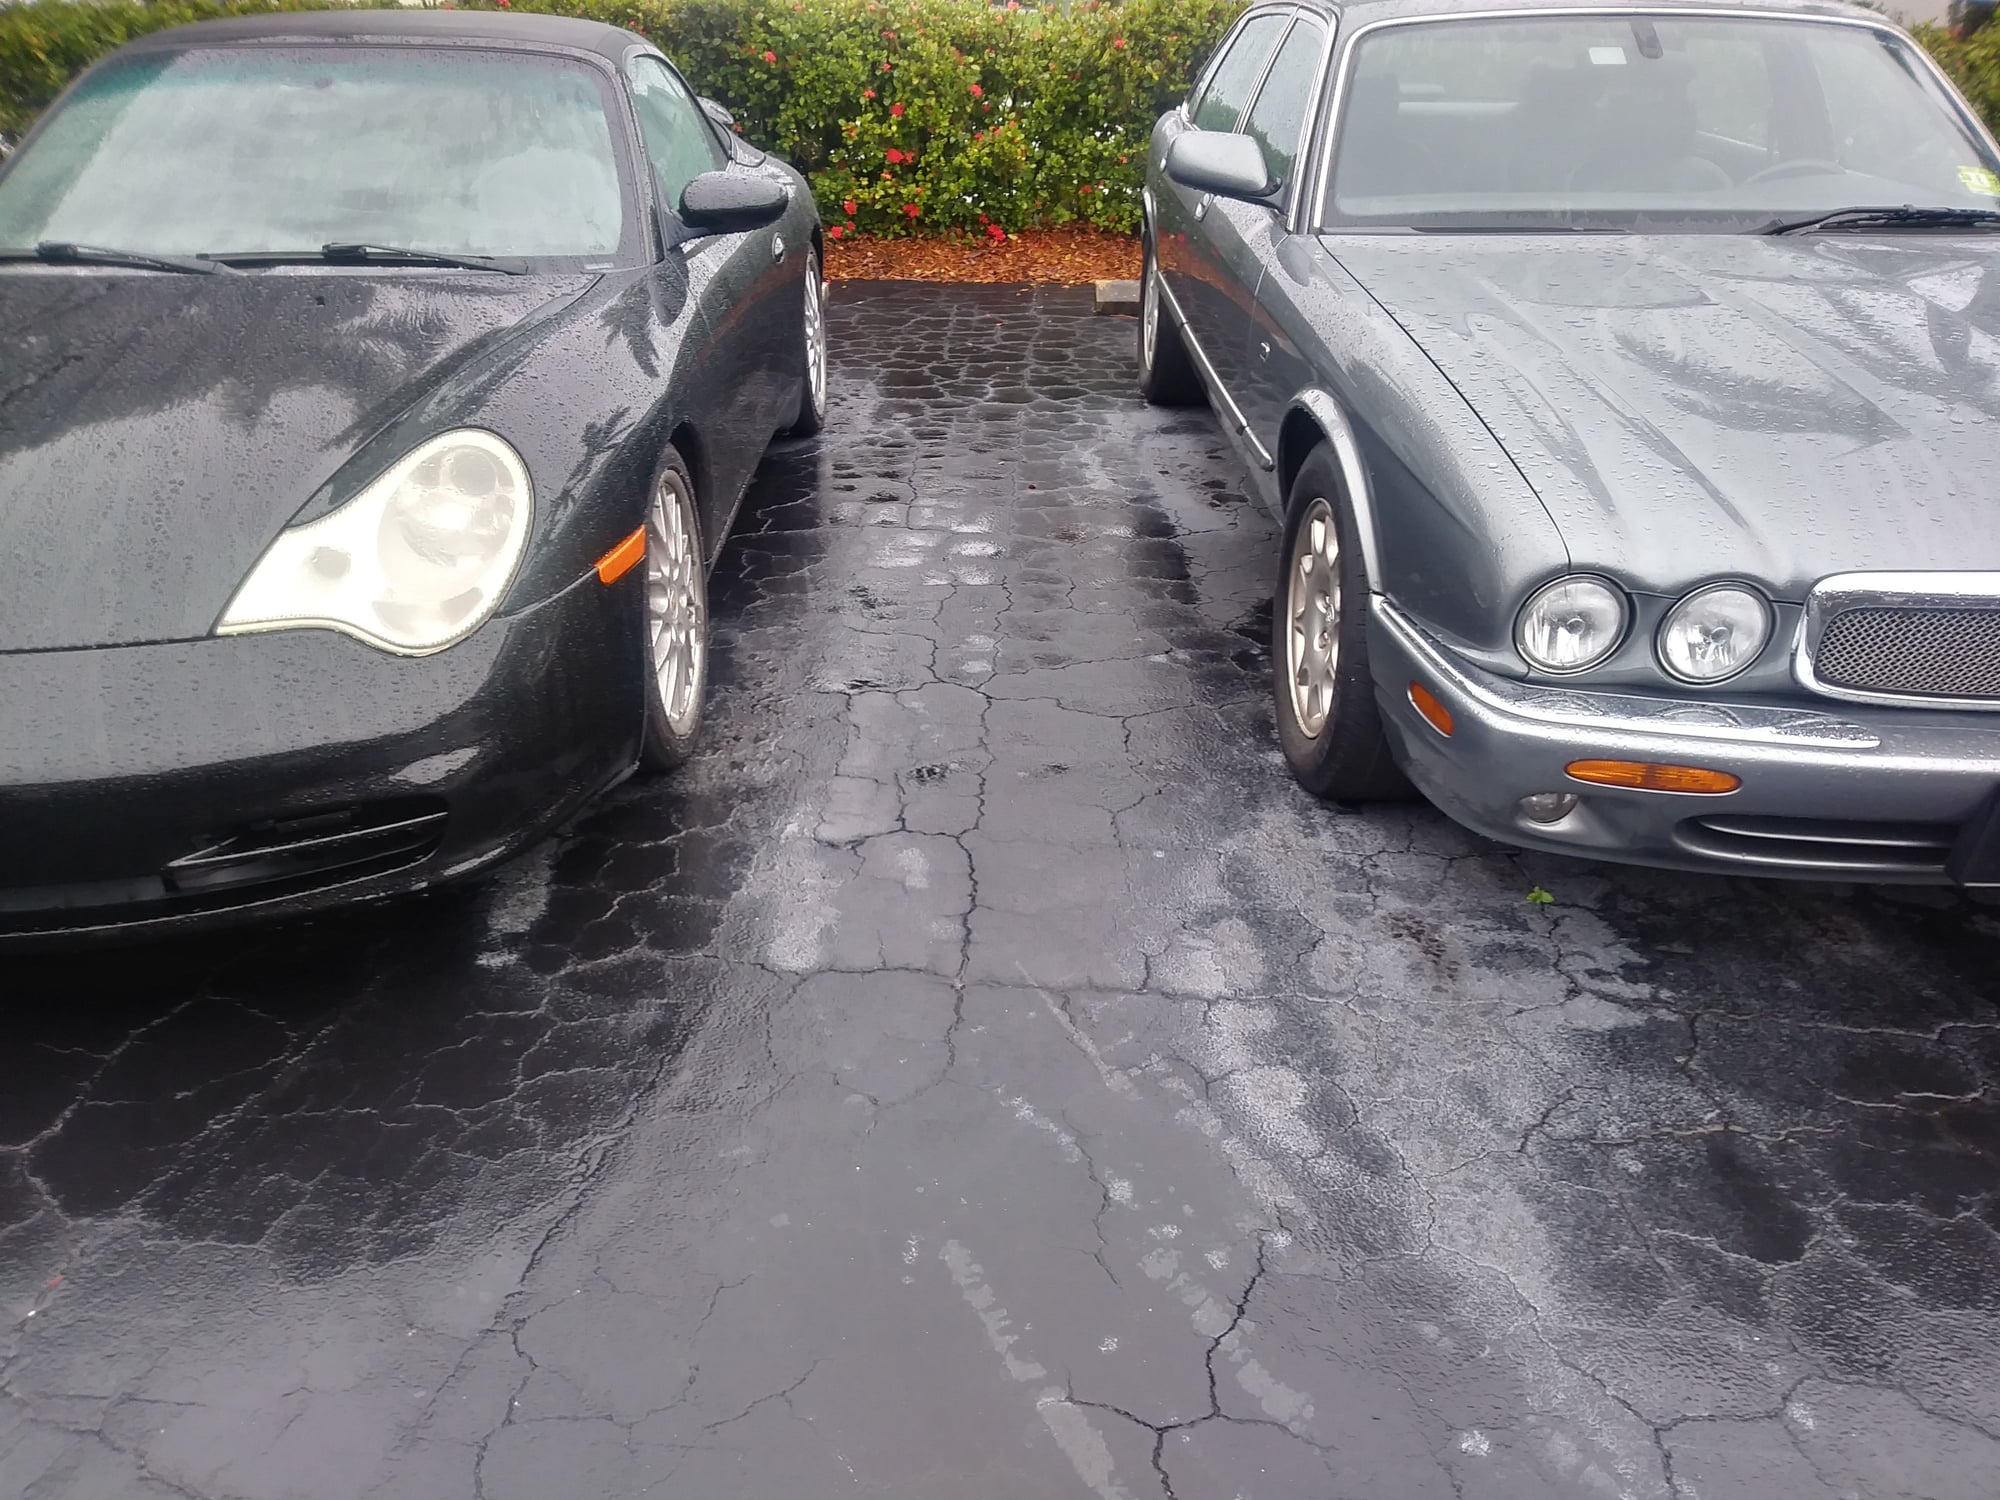 2003 Jaguar XJ8 - X308 Parts Car -- good parts bad trans. - Used - VIN 00000000000000000 - 123,000 Miles - 8 cyl - 2WD - Automatic - Sedan - Gray - Port Charlotte, FL 33952, United States